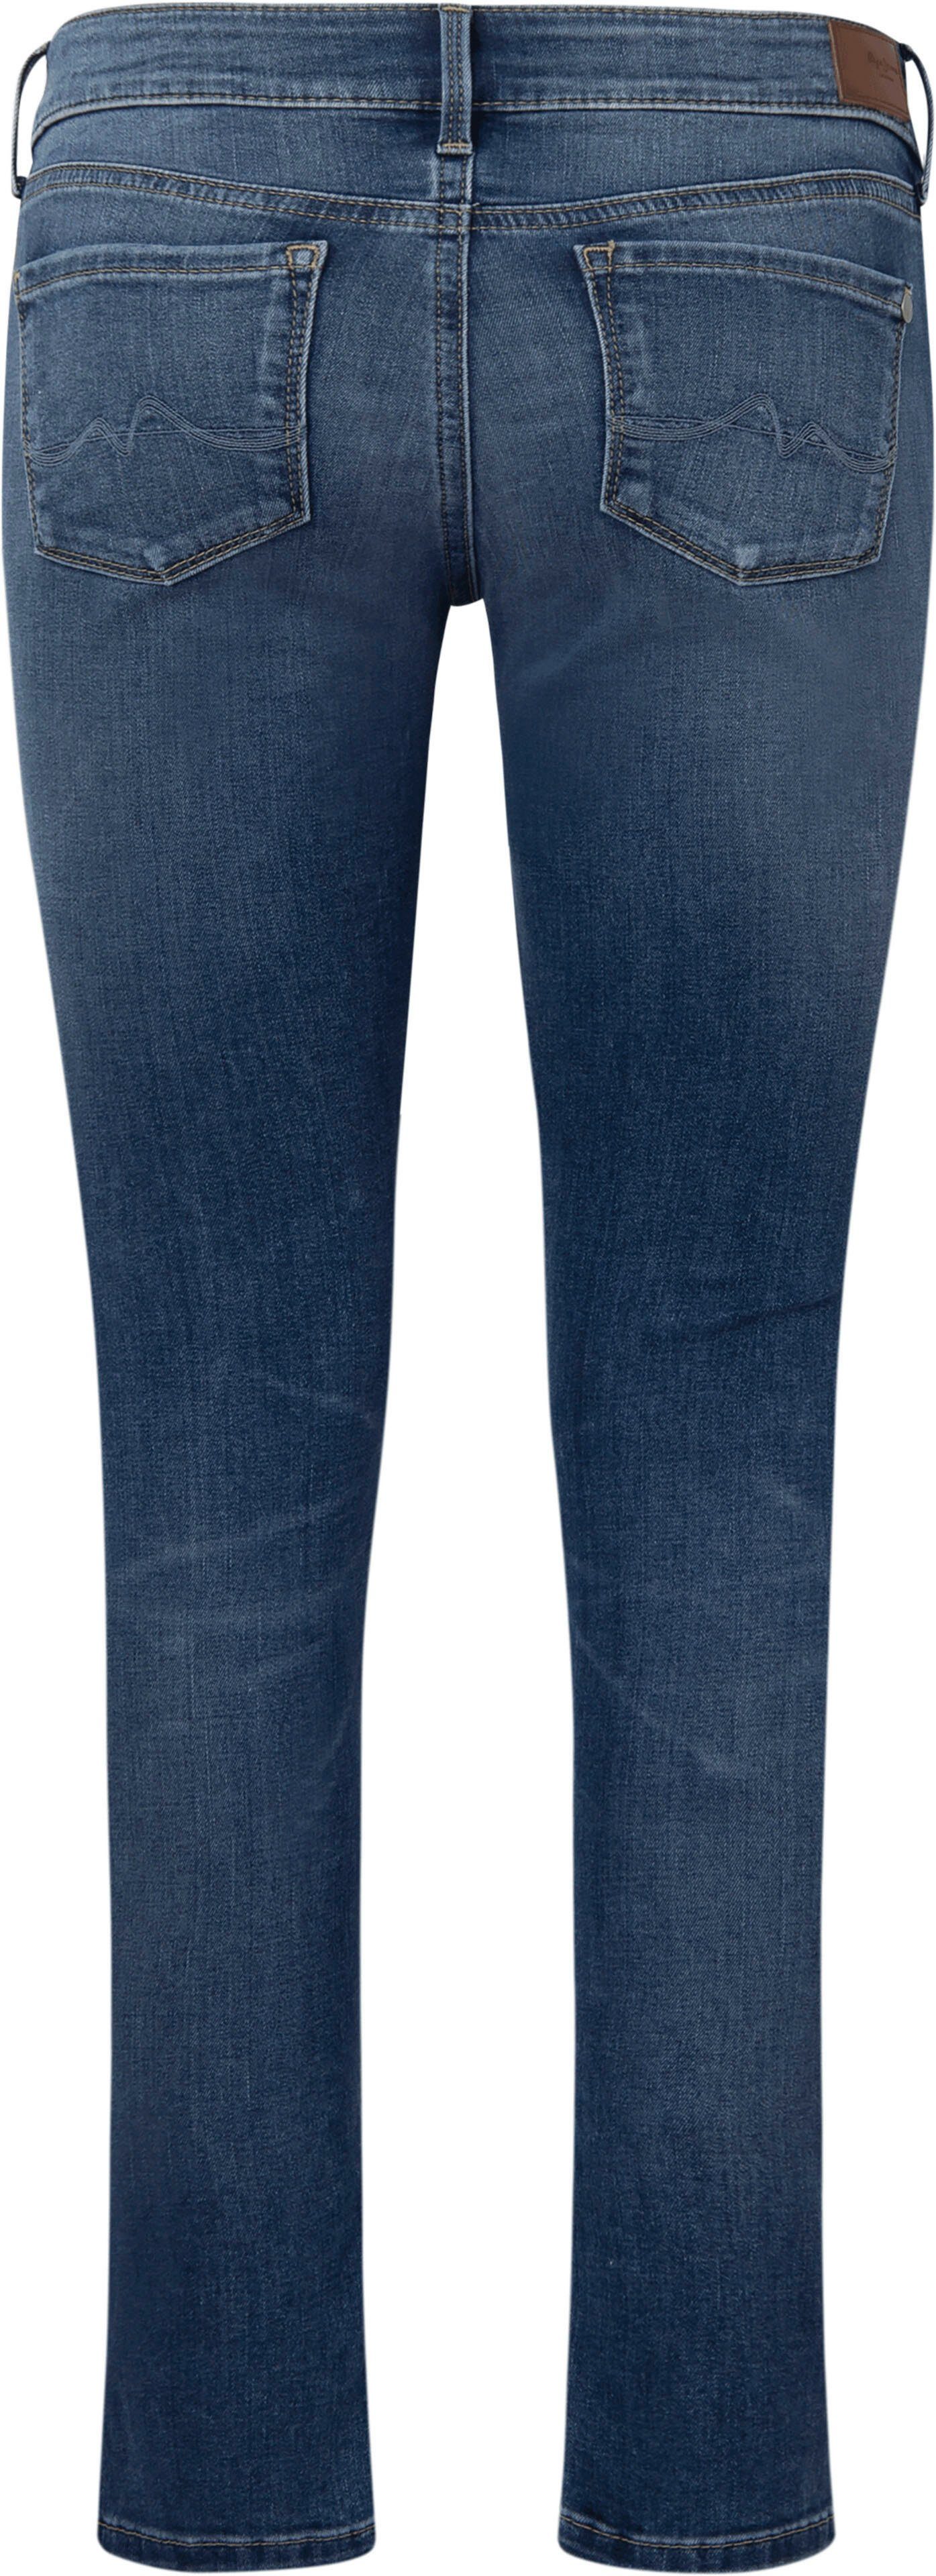 Pepe Jeans Skinny-fit-Jeans SOHO Bund und Stretch-Anteil blue 1-Knopf mit 5-Pocket-Stil im